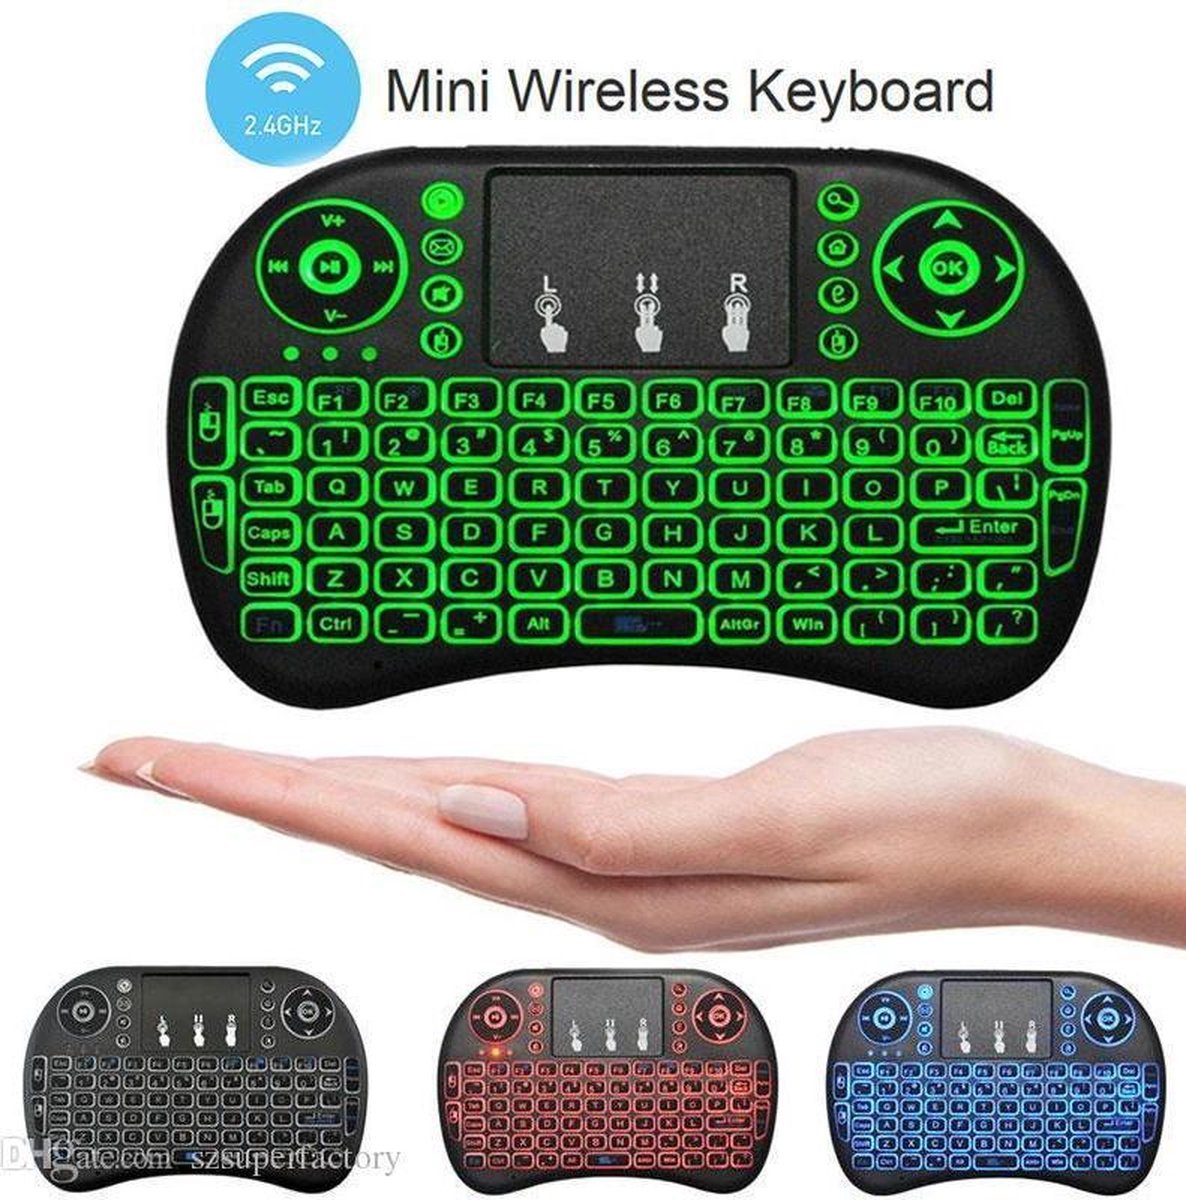 Mini i8 keyboard met backlight (Led) voor ANDROID, Windows, Linux, Raspberry Pi, Smart TV, Console, KODI, met 3 licht kleuren,rood, groen, blauw.